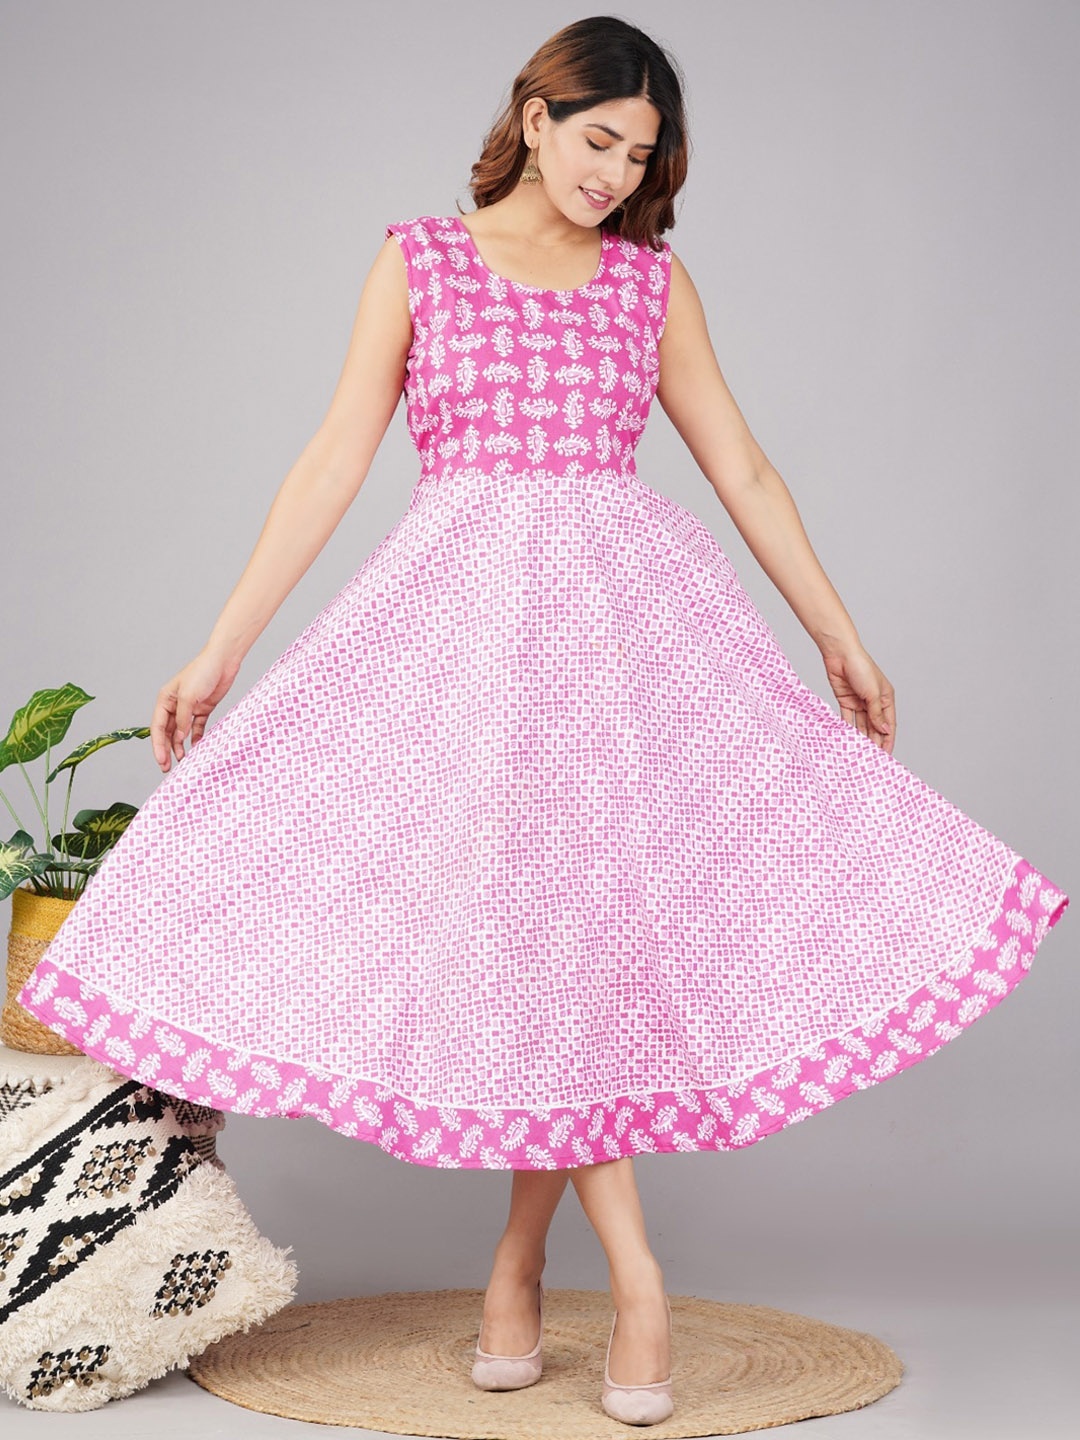 

UNIBLISS Ethnic Motifs Printed A-line Ethnic Dress, Pink